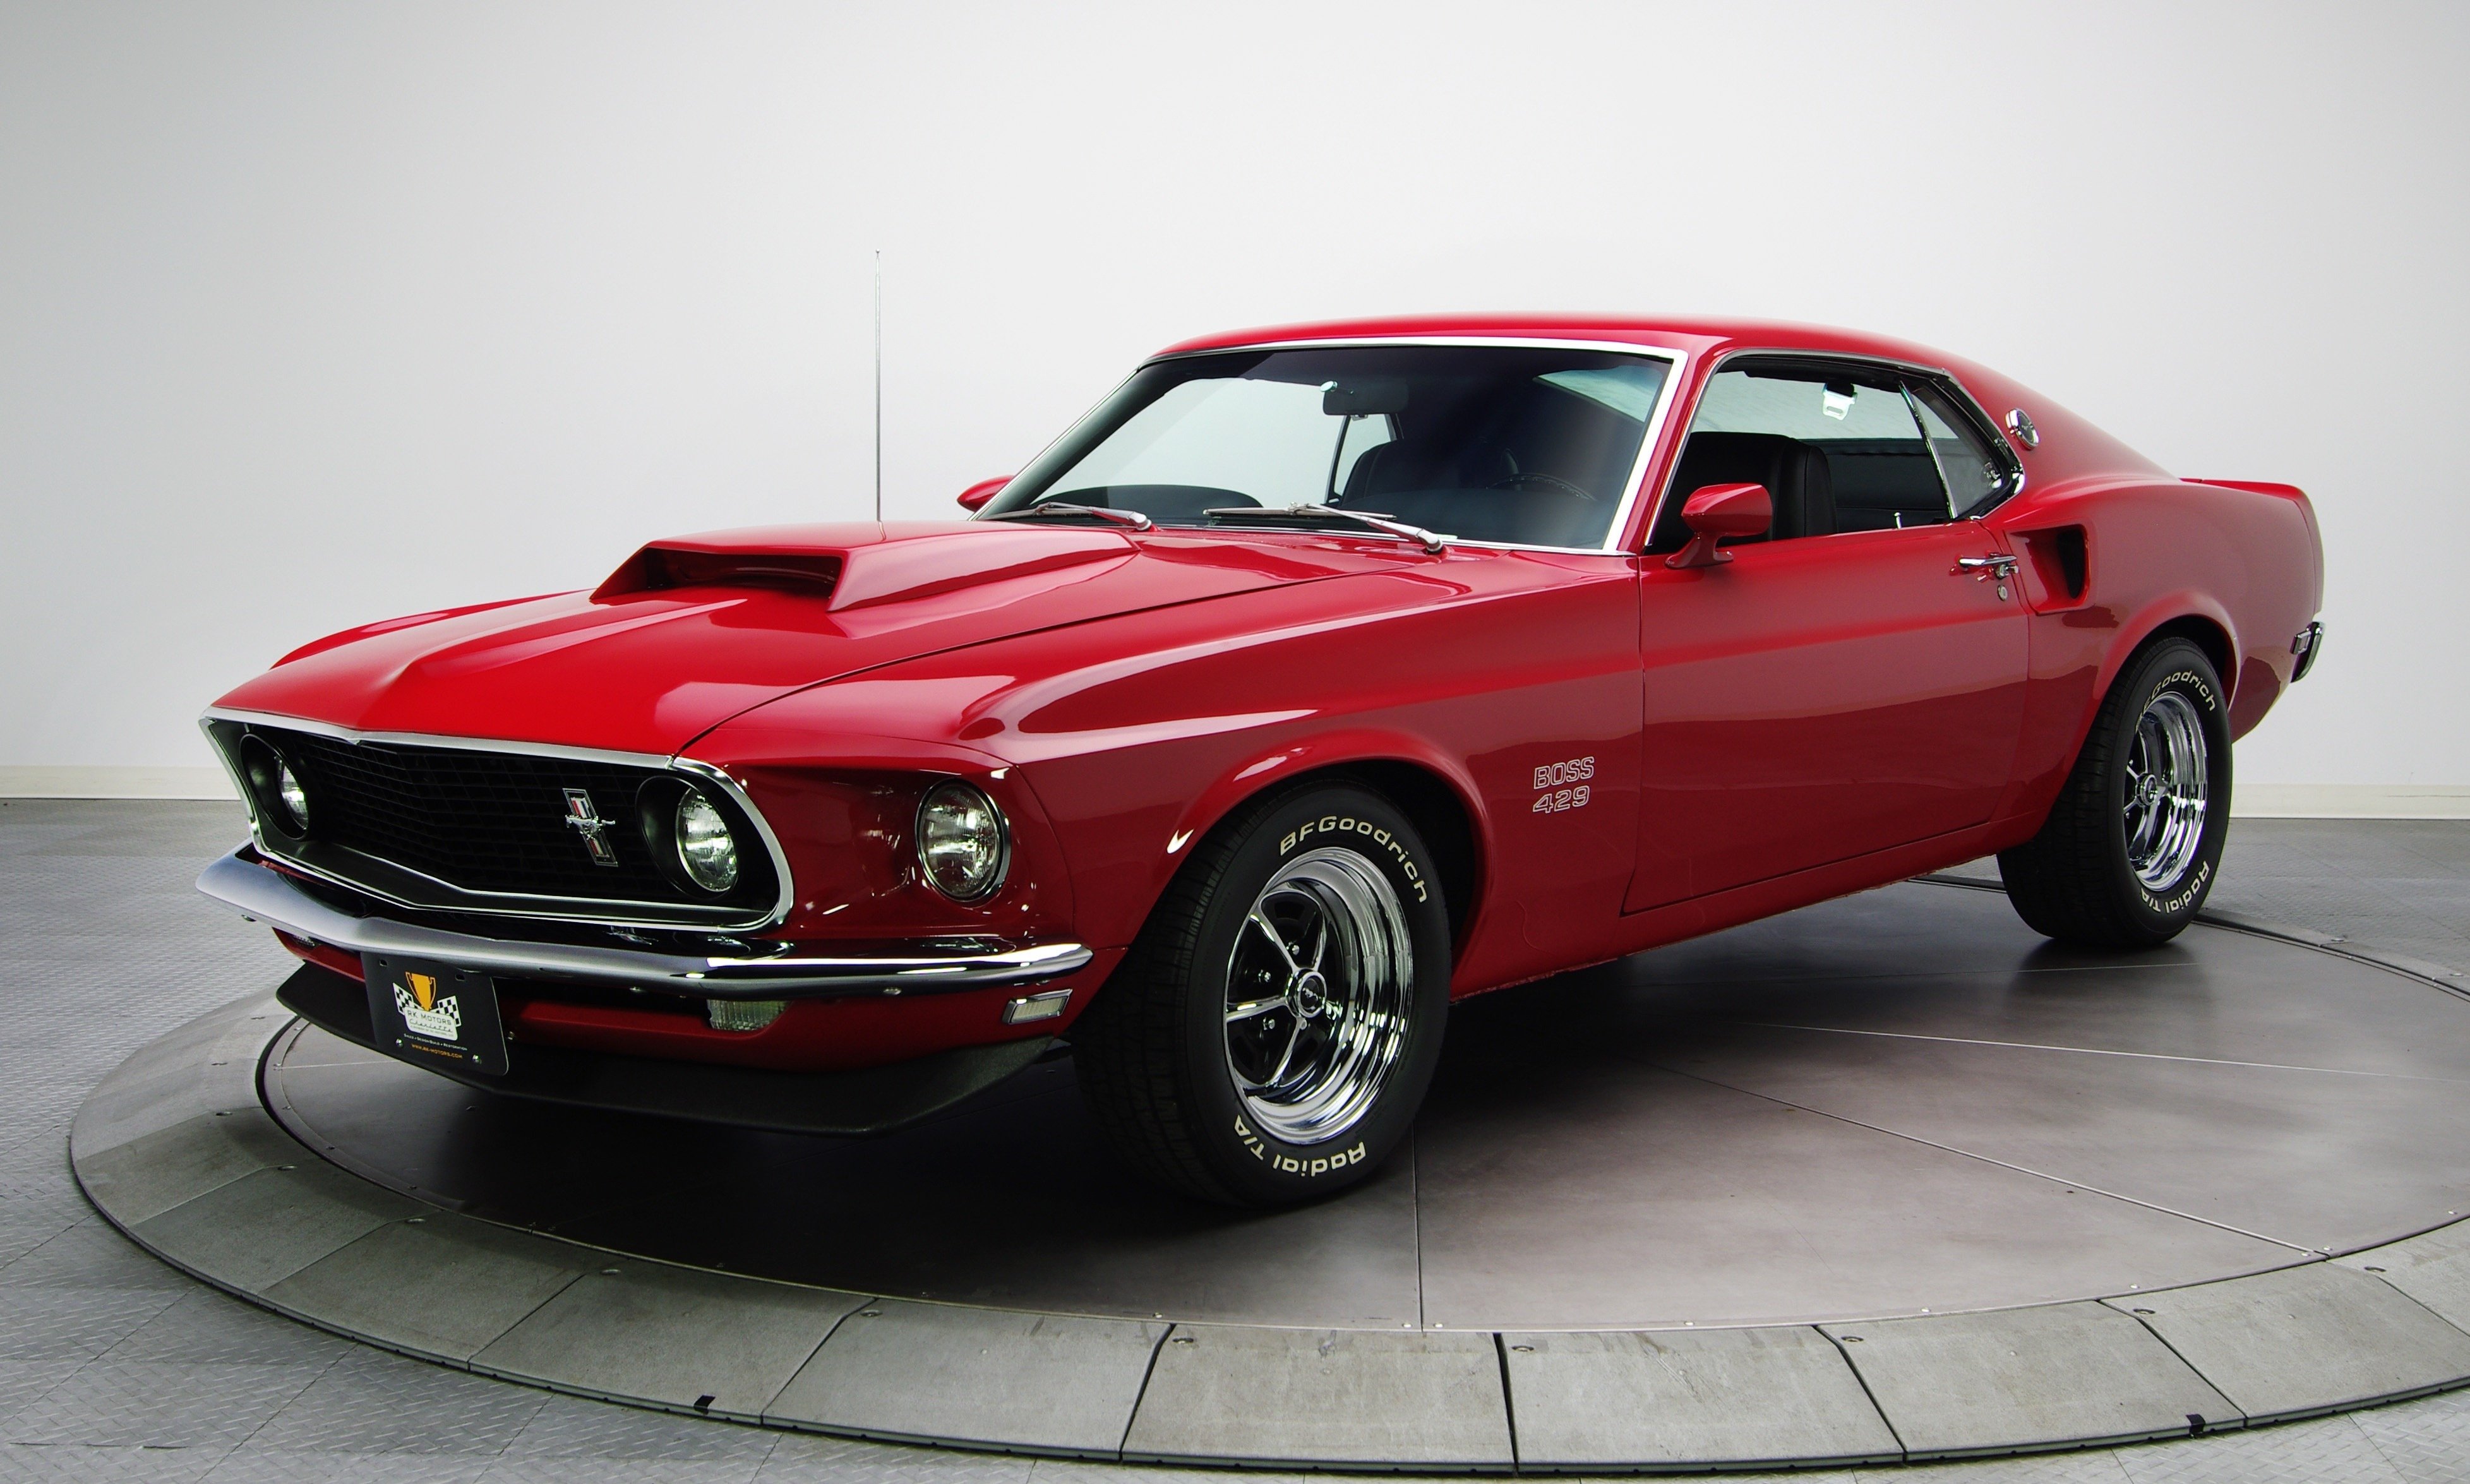 Американский мустанг. Форд Мустанг 1969 красный. Форд Мустанг 1969. Ford Mustang Boss 429. Форд Мустанг босс 1969.